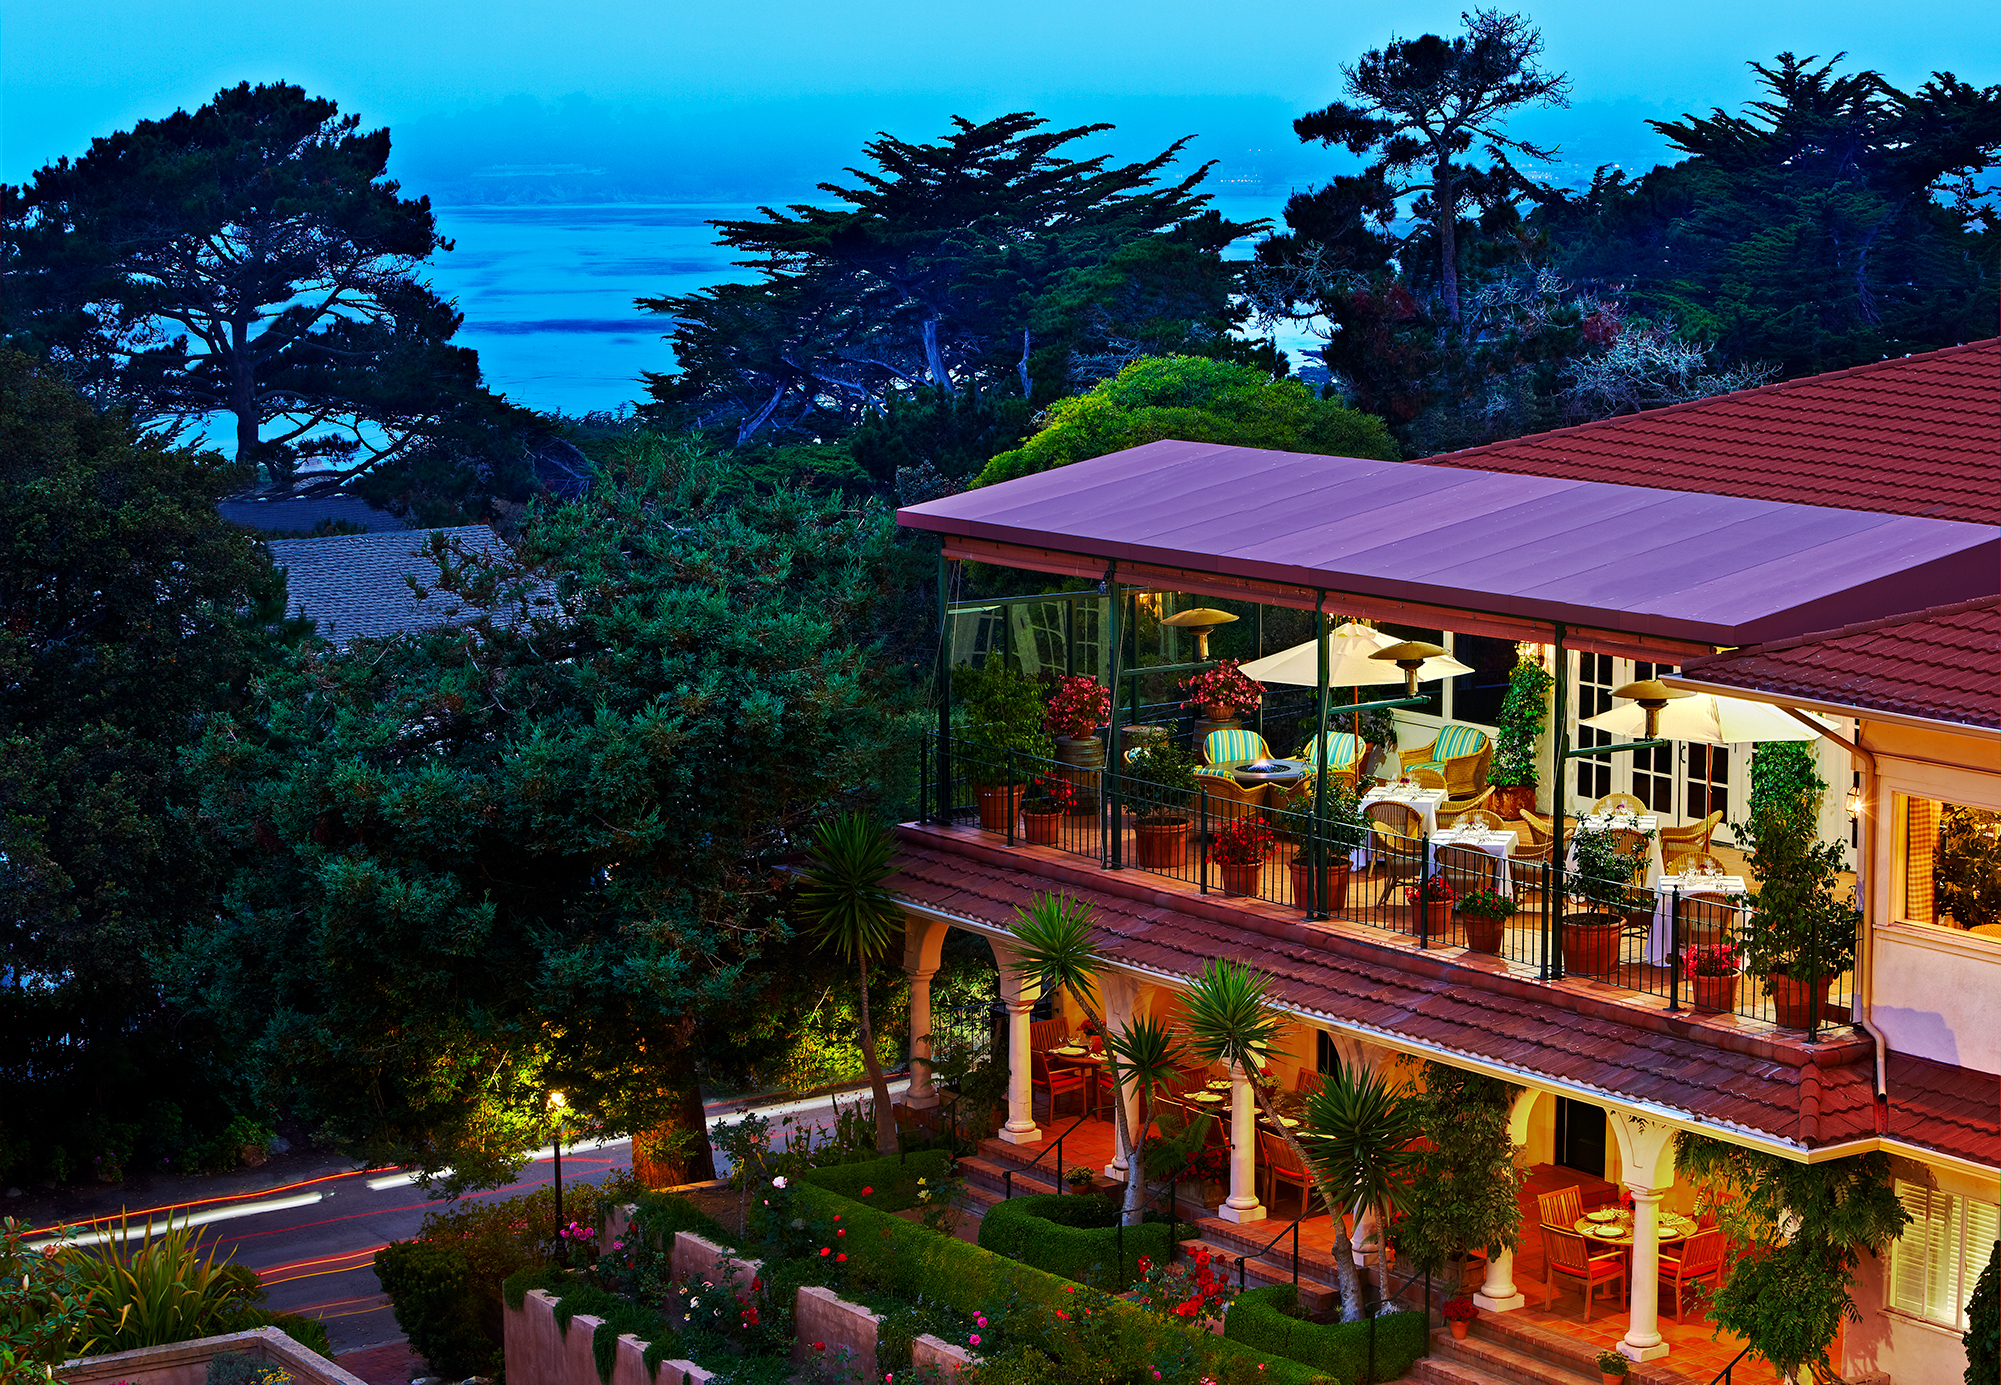 Photo of La Playa Hotel, Carmel by the Sea, CA